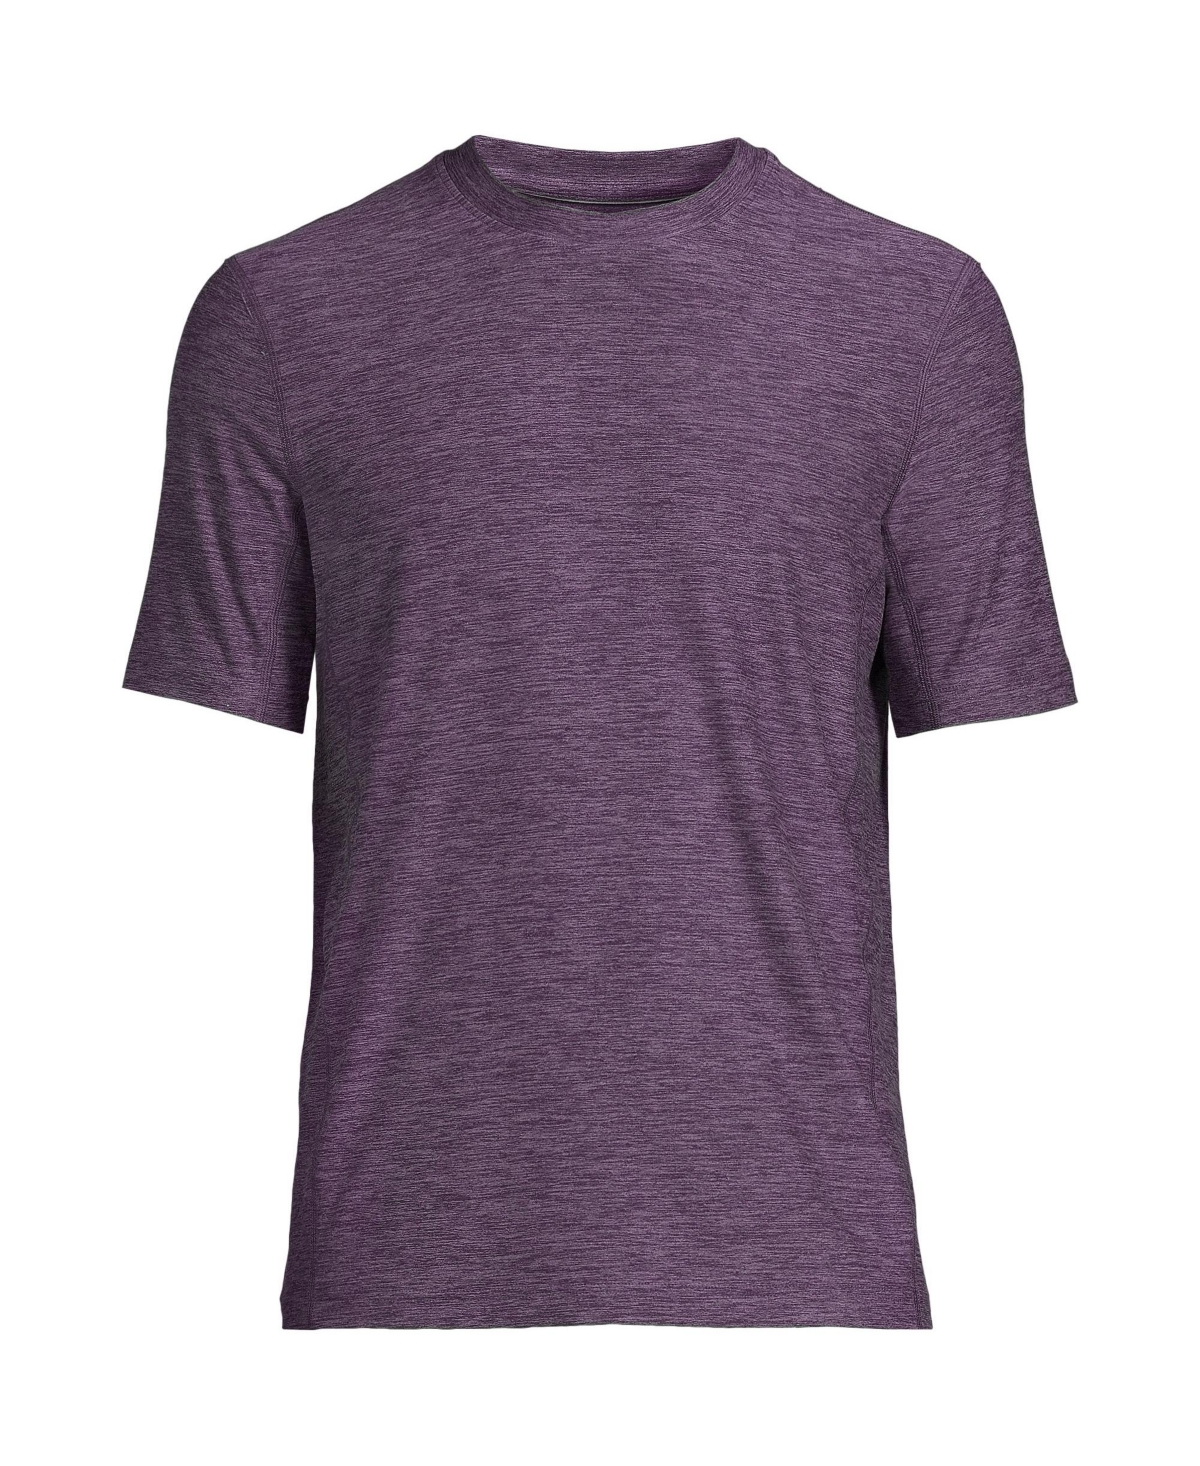 Men's Short Sleeve Performance Social Active T-Shirt - Desert sage spacedye